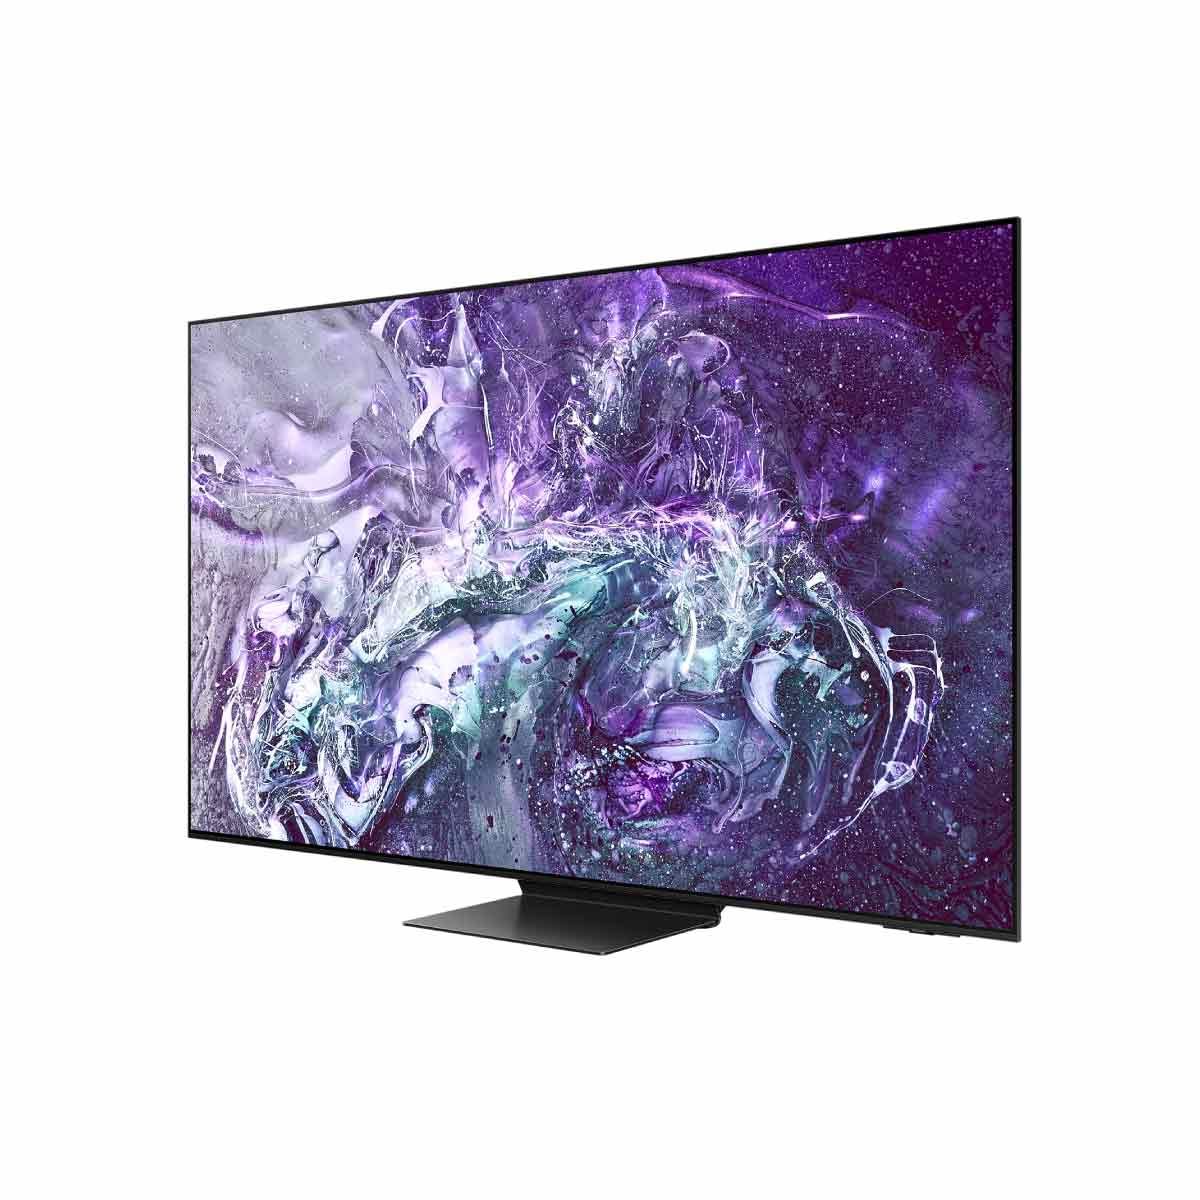 SAMSUNG OLED Smart TV 4K รุ่น QA65S95DAK QD-OLED Glare Free 144Hz สมาร์ททีวี 65 นิ้ว